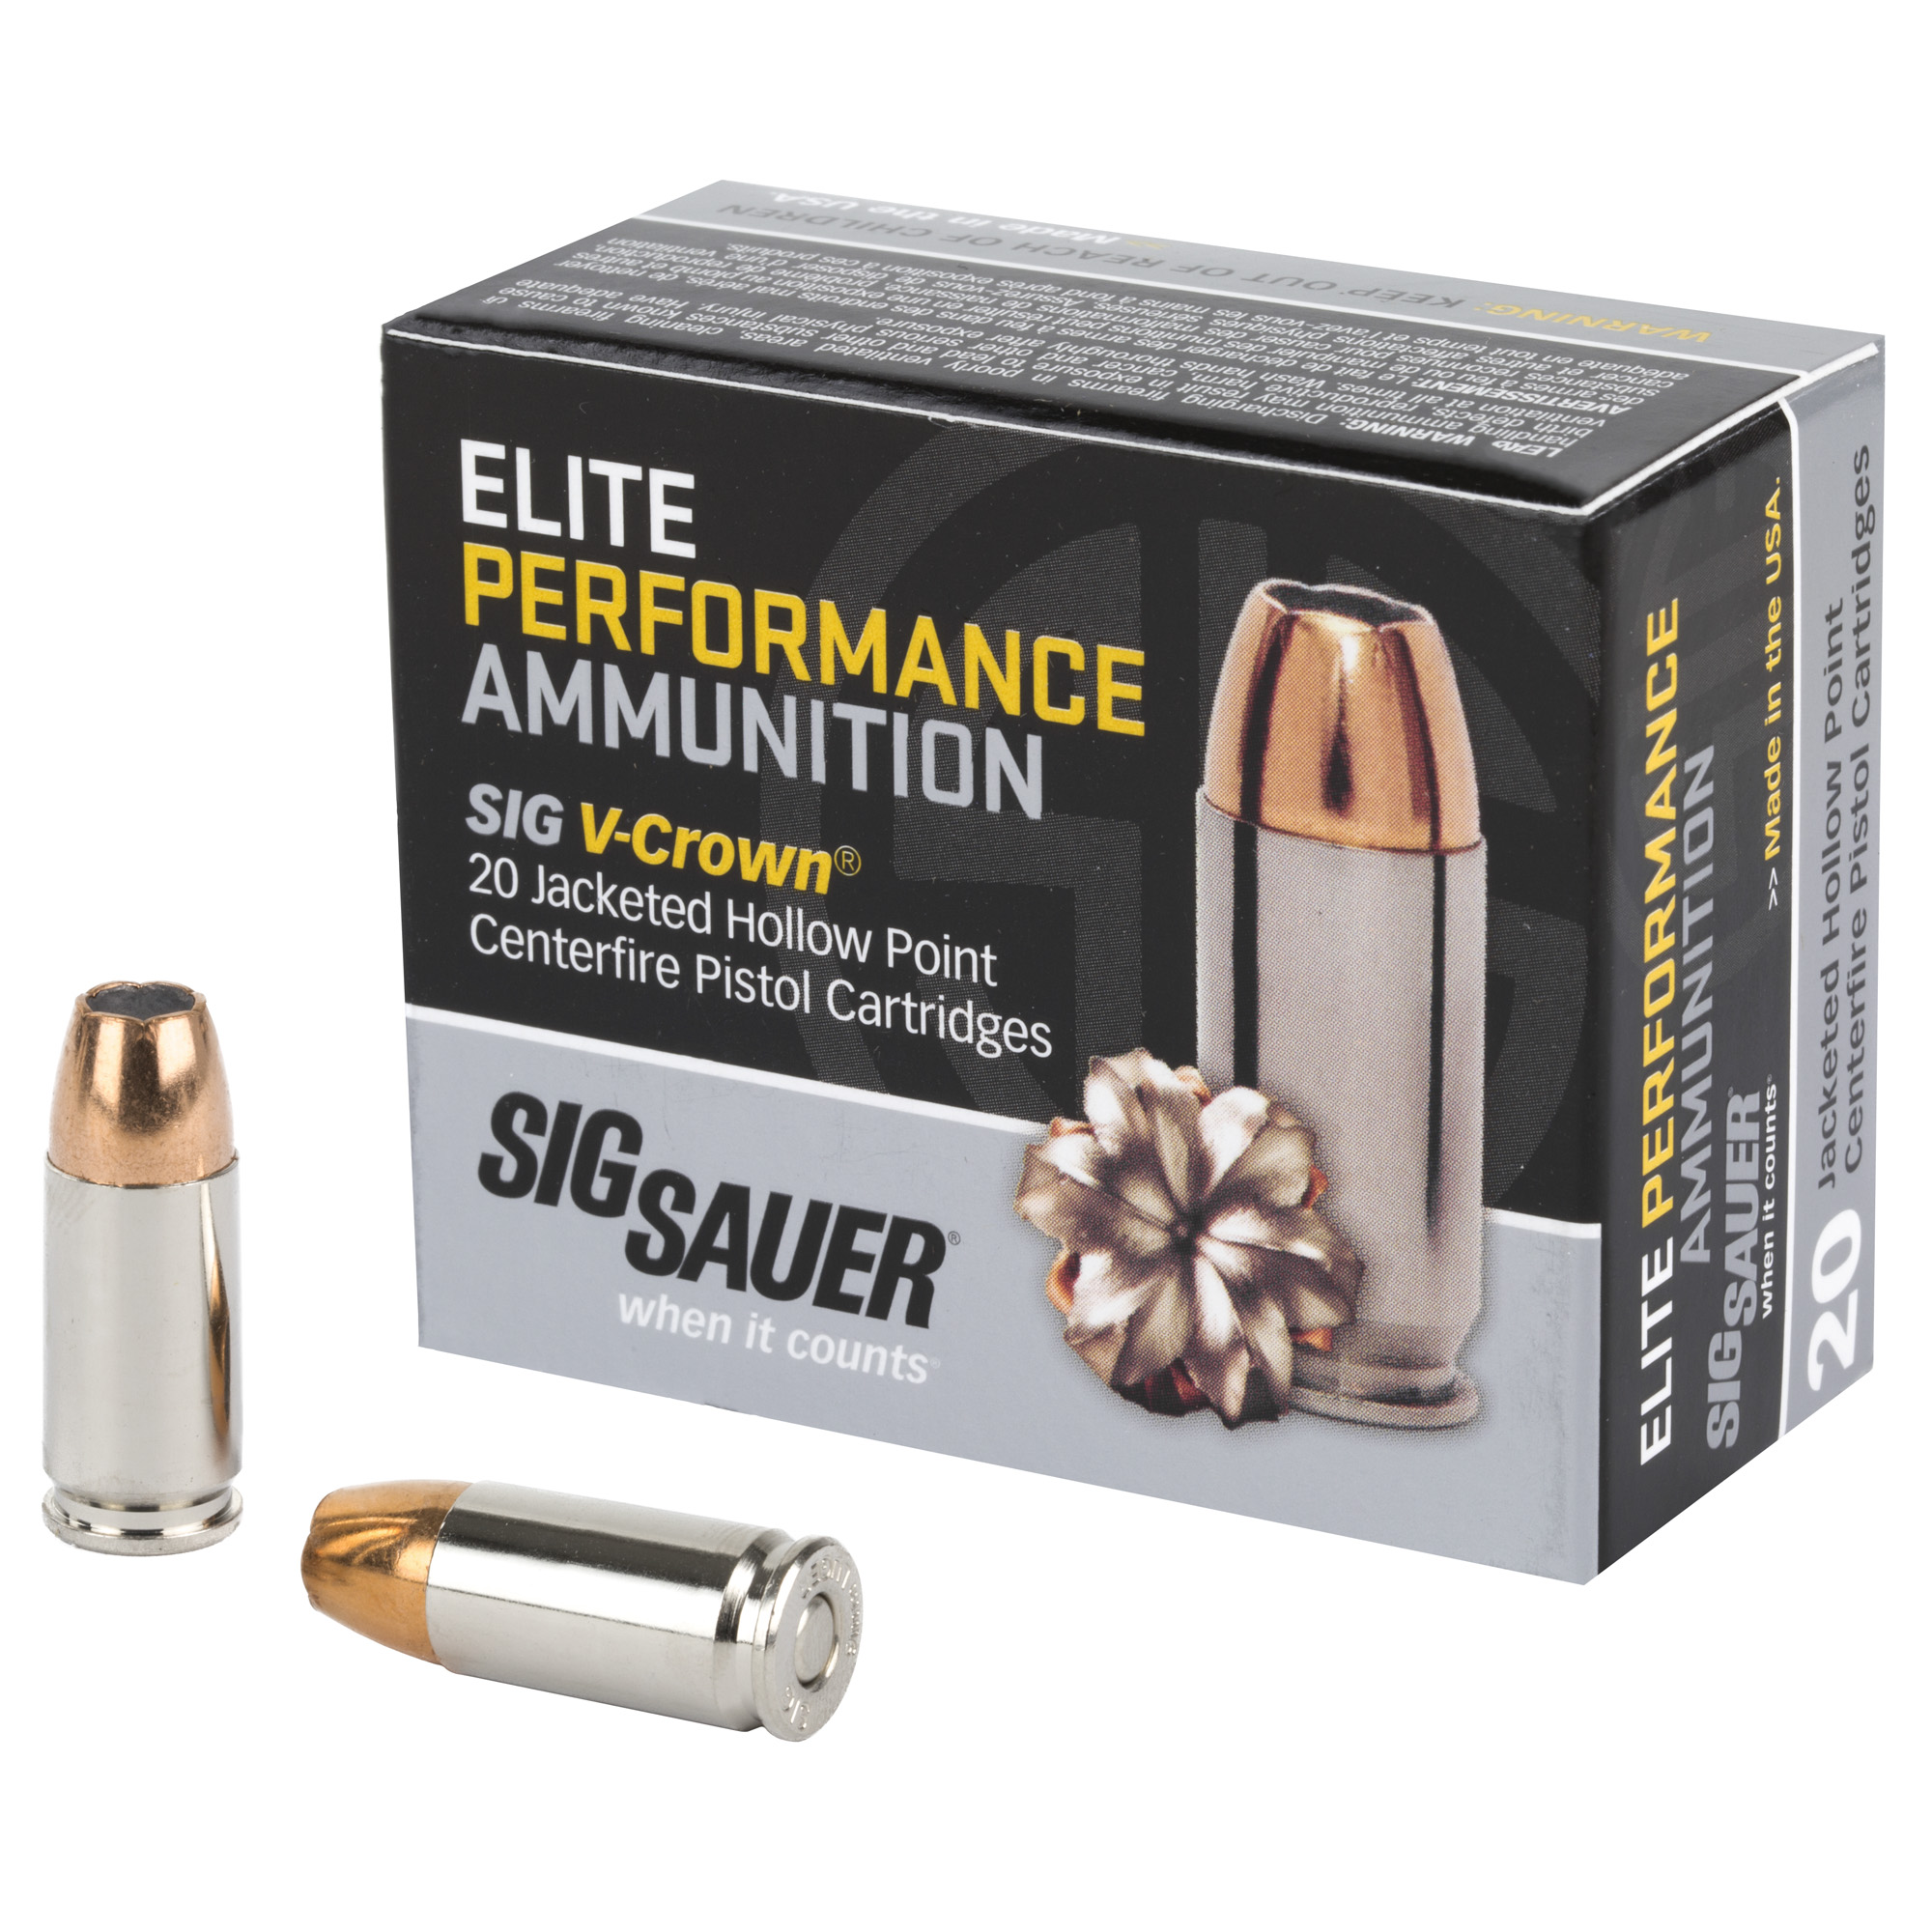 SIG Sauer Elite, 9mm Luger, V-Crown JHP Ammo, 147 Grain,  MPN # E9MMA3-20	, UPC: 798681501748